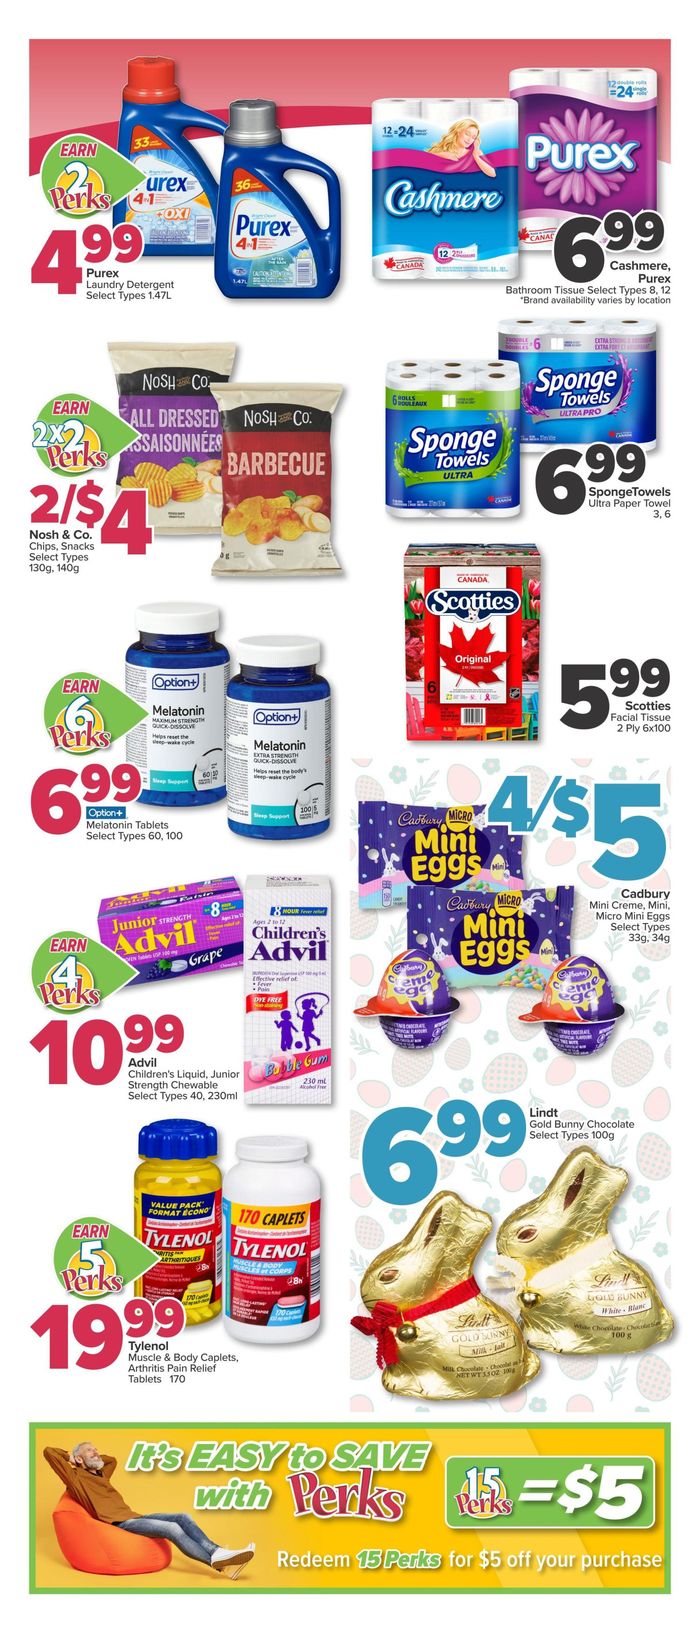 PharmaChoice catalogue | PharmaChoice Weekly ad | 2024-03-28 - 2024-04-03